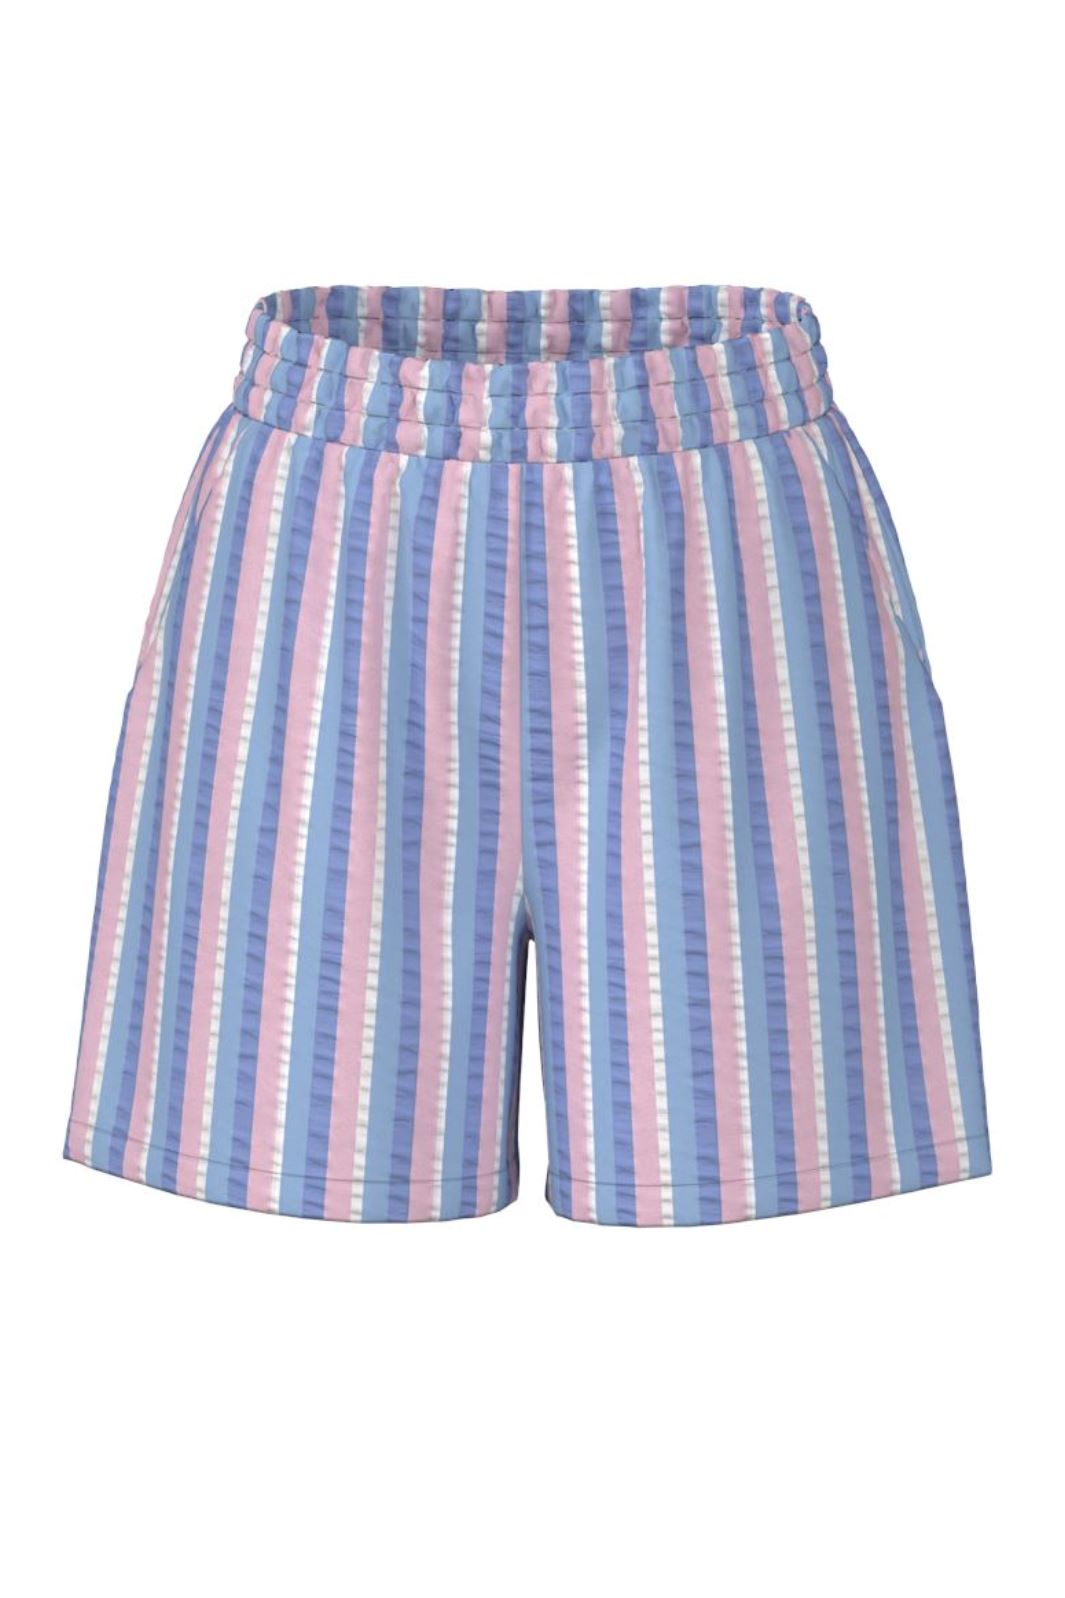 Pieces - Pcaitlyn Shorts - 4559113 Hydrangea Multi Stripes Shorts 